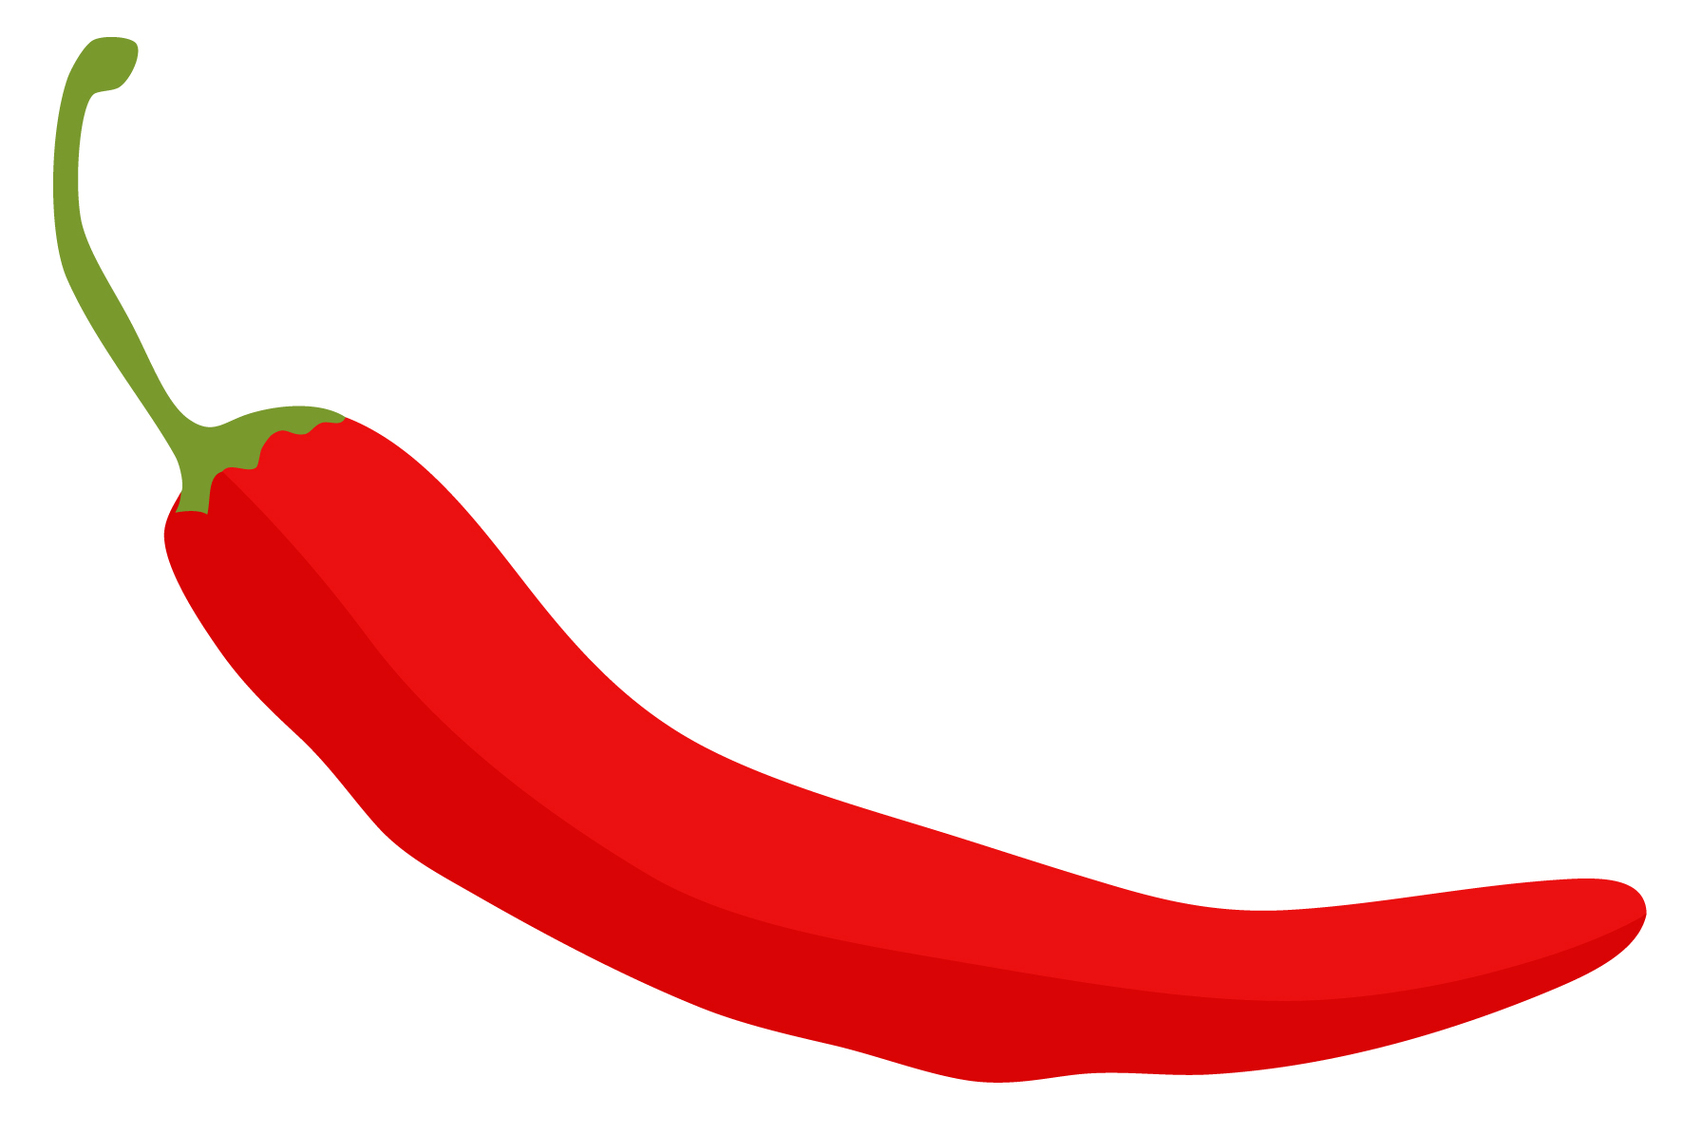 Chili Pepper Border Clipart - Free to use Clip Art Resource